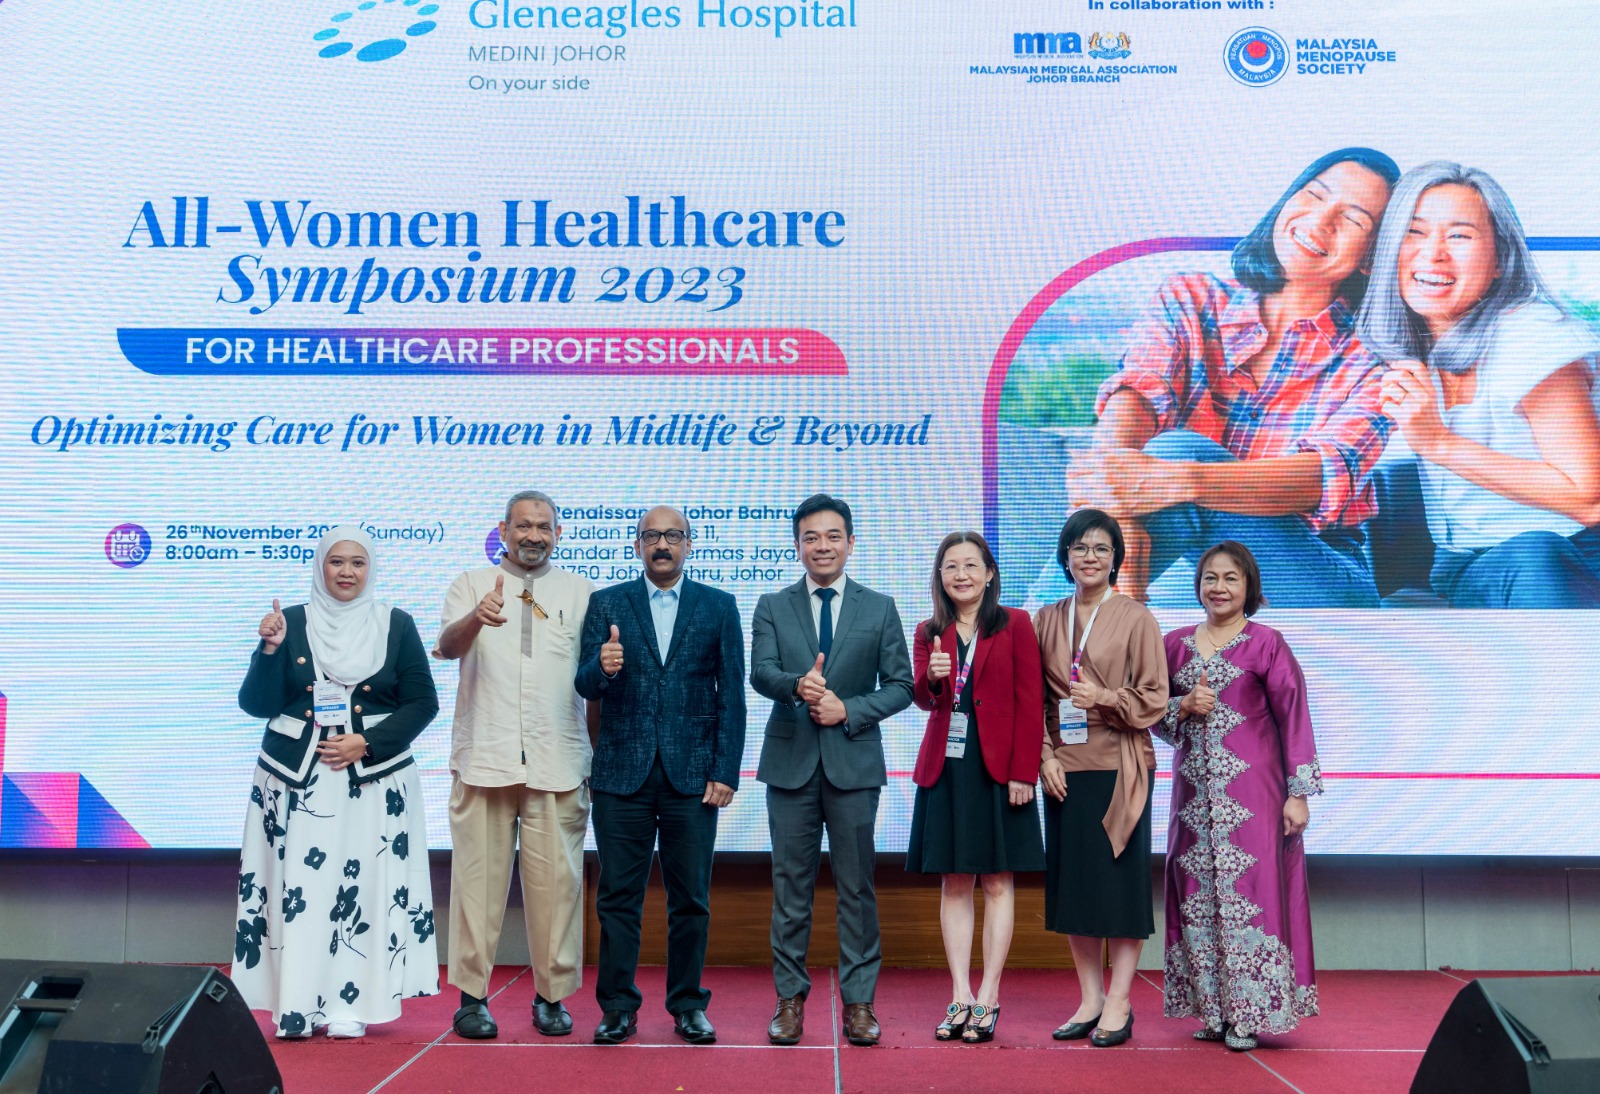 From left to right: Dr Rohaida Binti Adam (Co-course Director and Moderator, Consultant, Obstetrics and Gynaecology, O&G), Dr Abdul Kadir Bin Abu Bakar (PIC of Gleneagles Hospital Medini Johor), Dr Mohan Kandasamy (Chairman of the Malaysian Medical Association Johor Branch), Dr Kamal Amzan (CEO of Gleneagles Hospital Johor), Dr Ho Choon Moy (President, Malaysa Menopause Society), Dr Sharifah Halimah Jaafar (Conference Director), Prof Dr Jamiyah Hassan is a consultant, Fetomaternal Medicine, Department of Obstetrics and Gynaecology, Hospital Al-Sultan Abdullah, UiTM Puncak Alam)